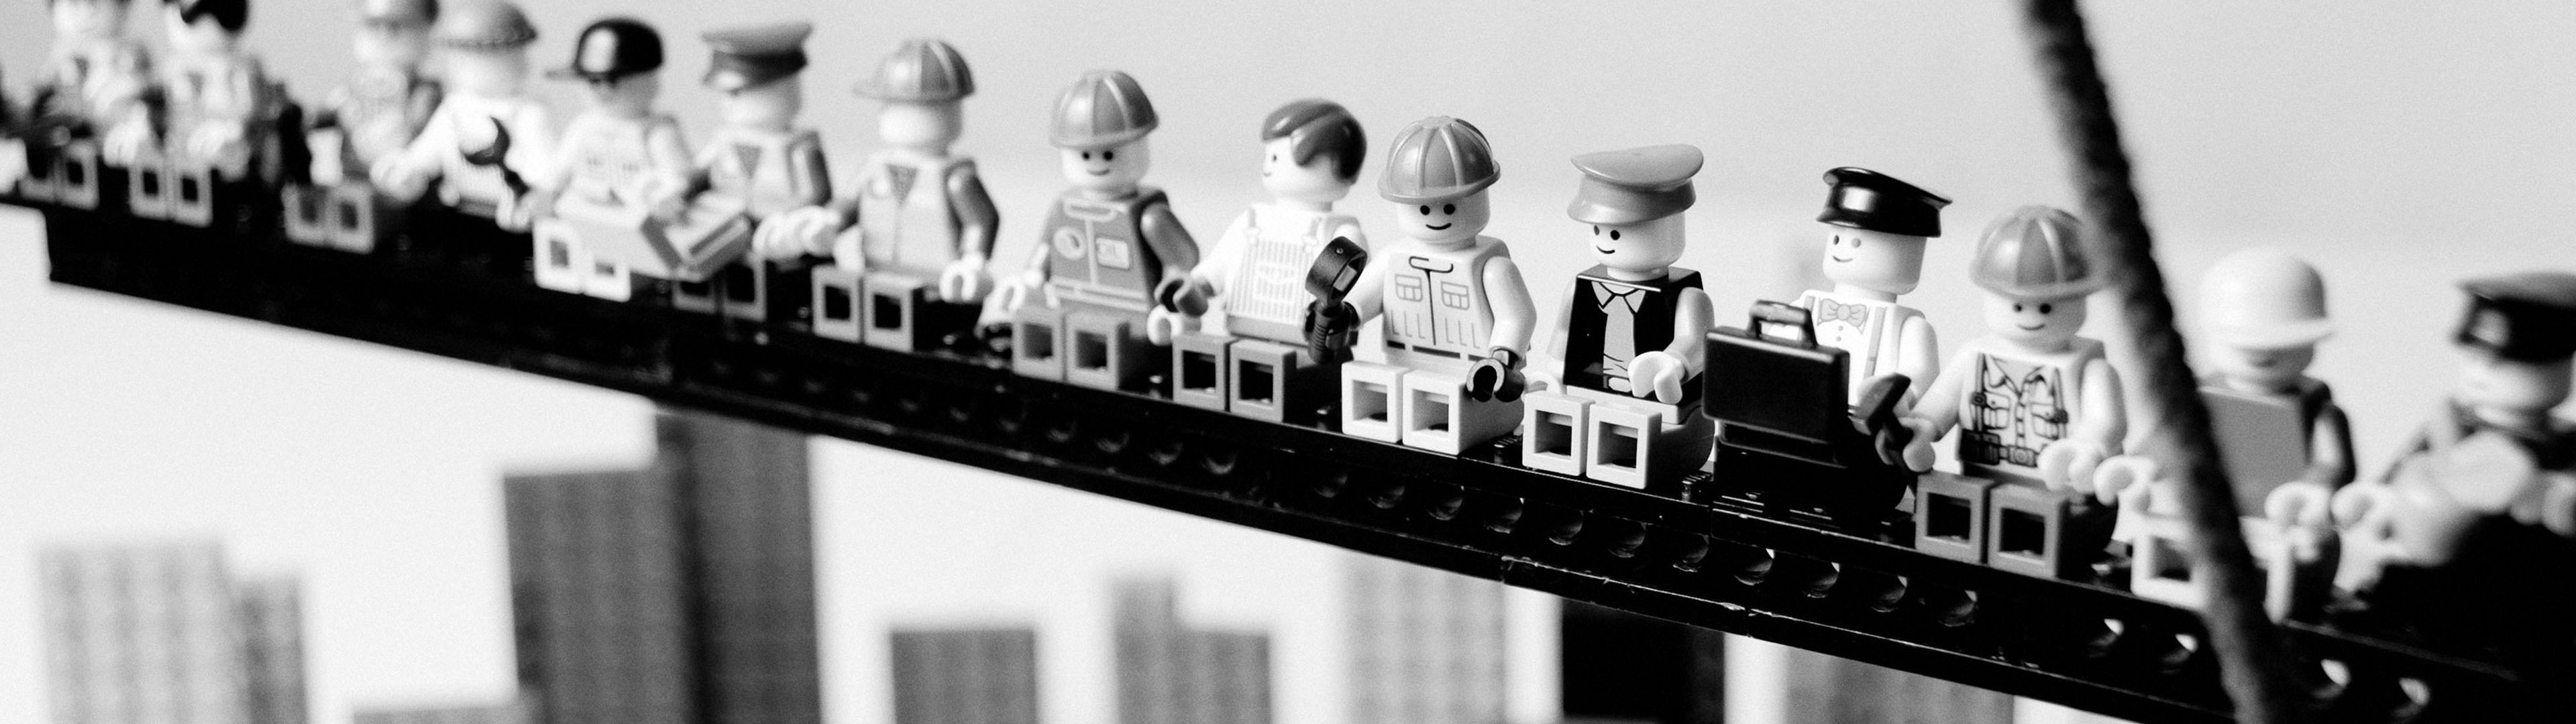 Lunch Atop A Skyscraper Lego - HD Wallpaper 